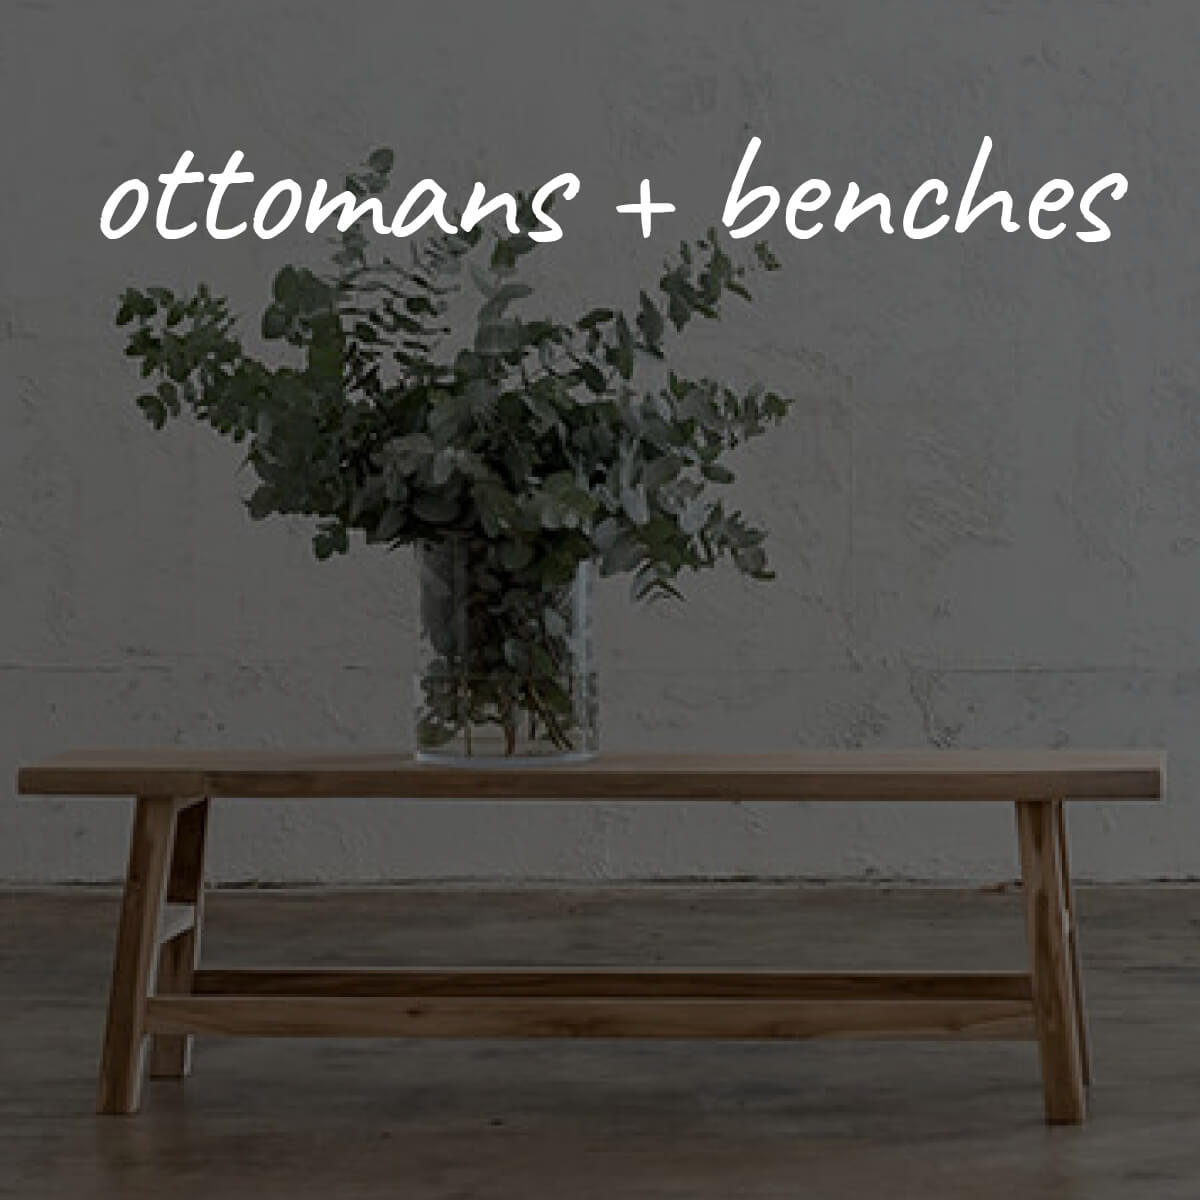 BENCH SEATS  |  OTTOMANS  |  STOOLS